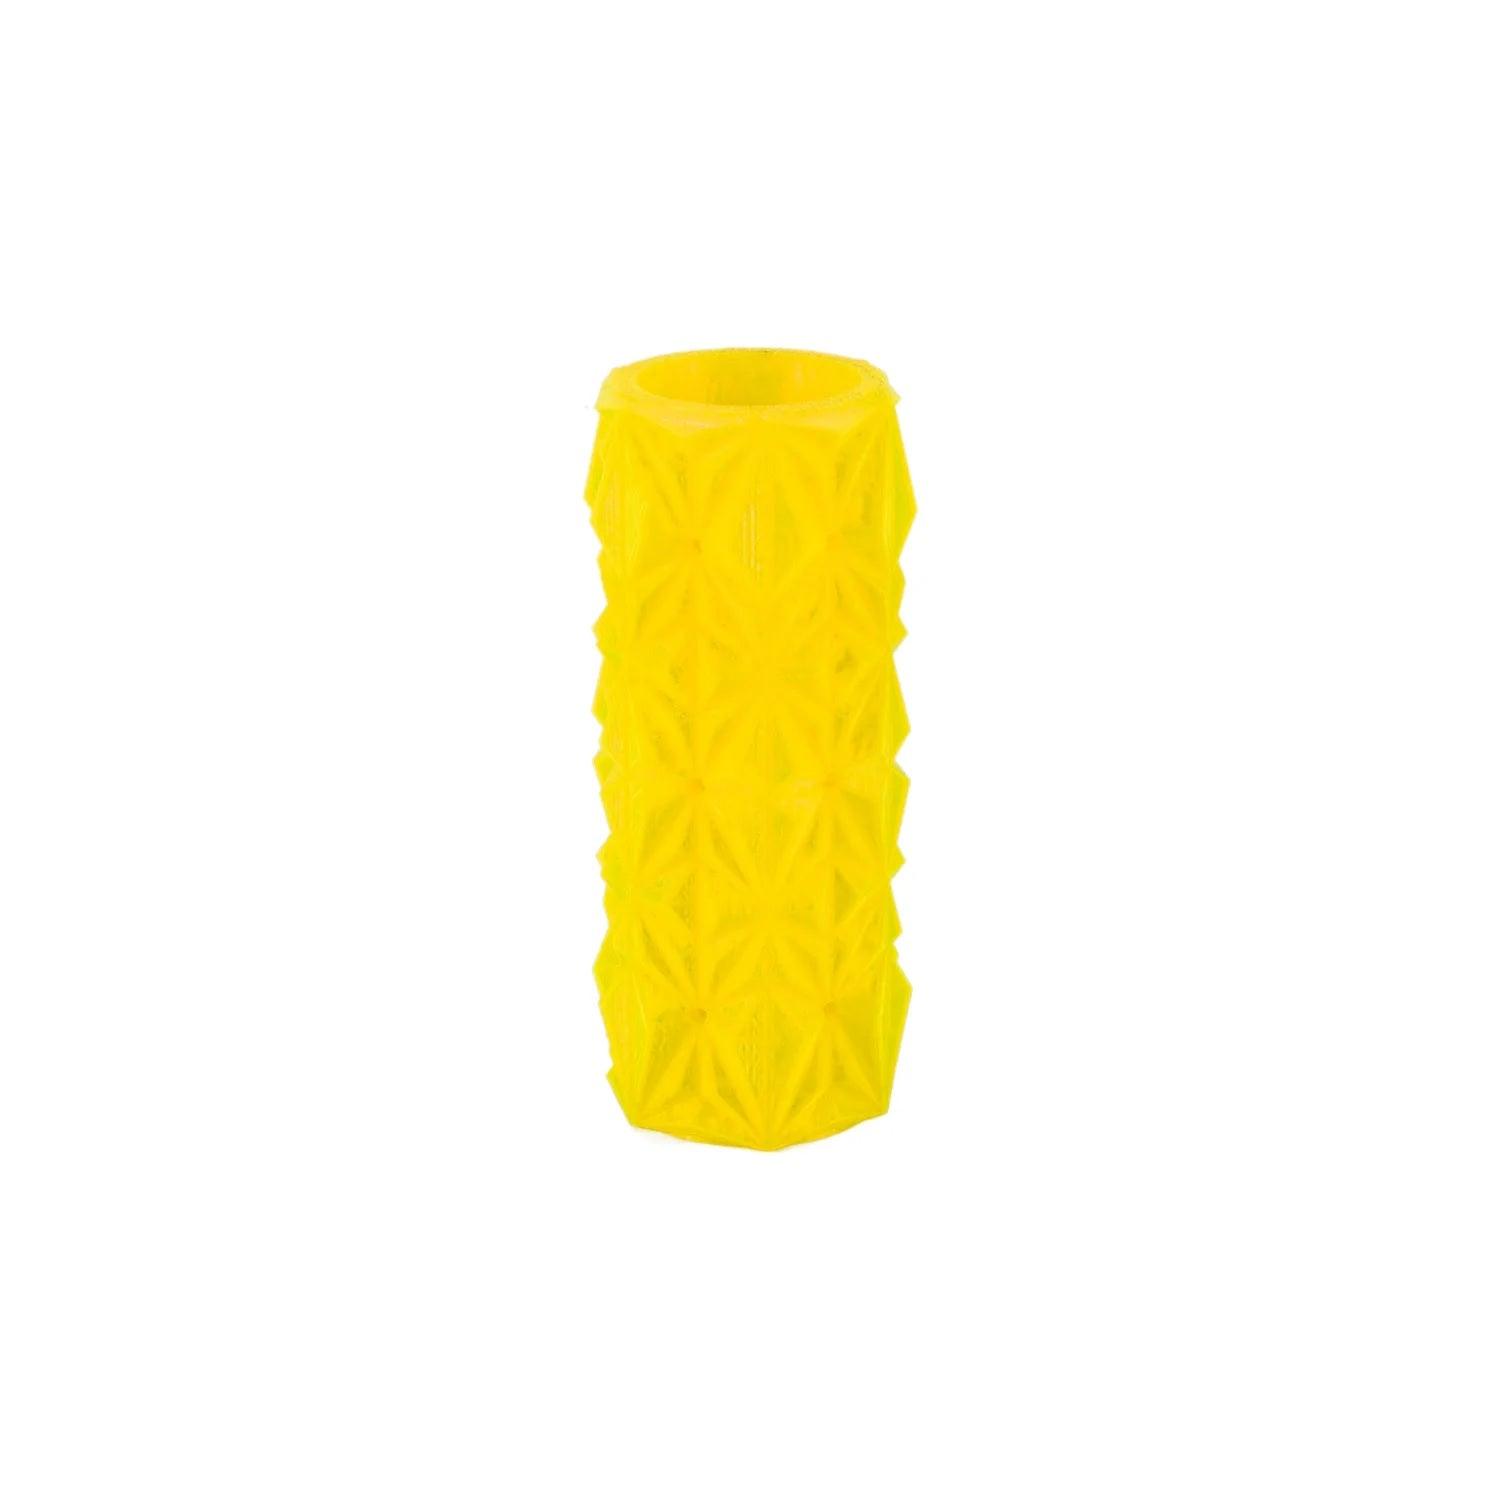 Aeon Vyro Mod Sleeve - 3D Yellow with Purge - shishagear - UK Shisha Hookah Black Friday